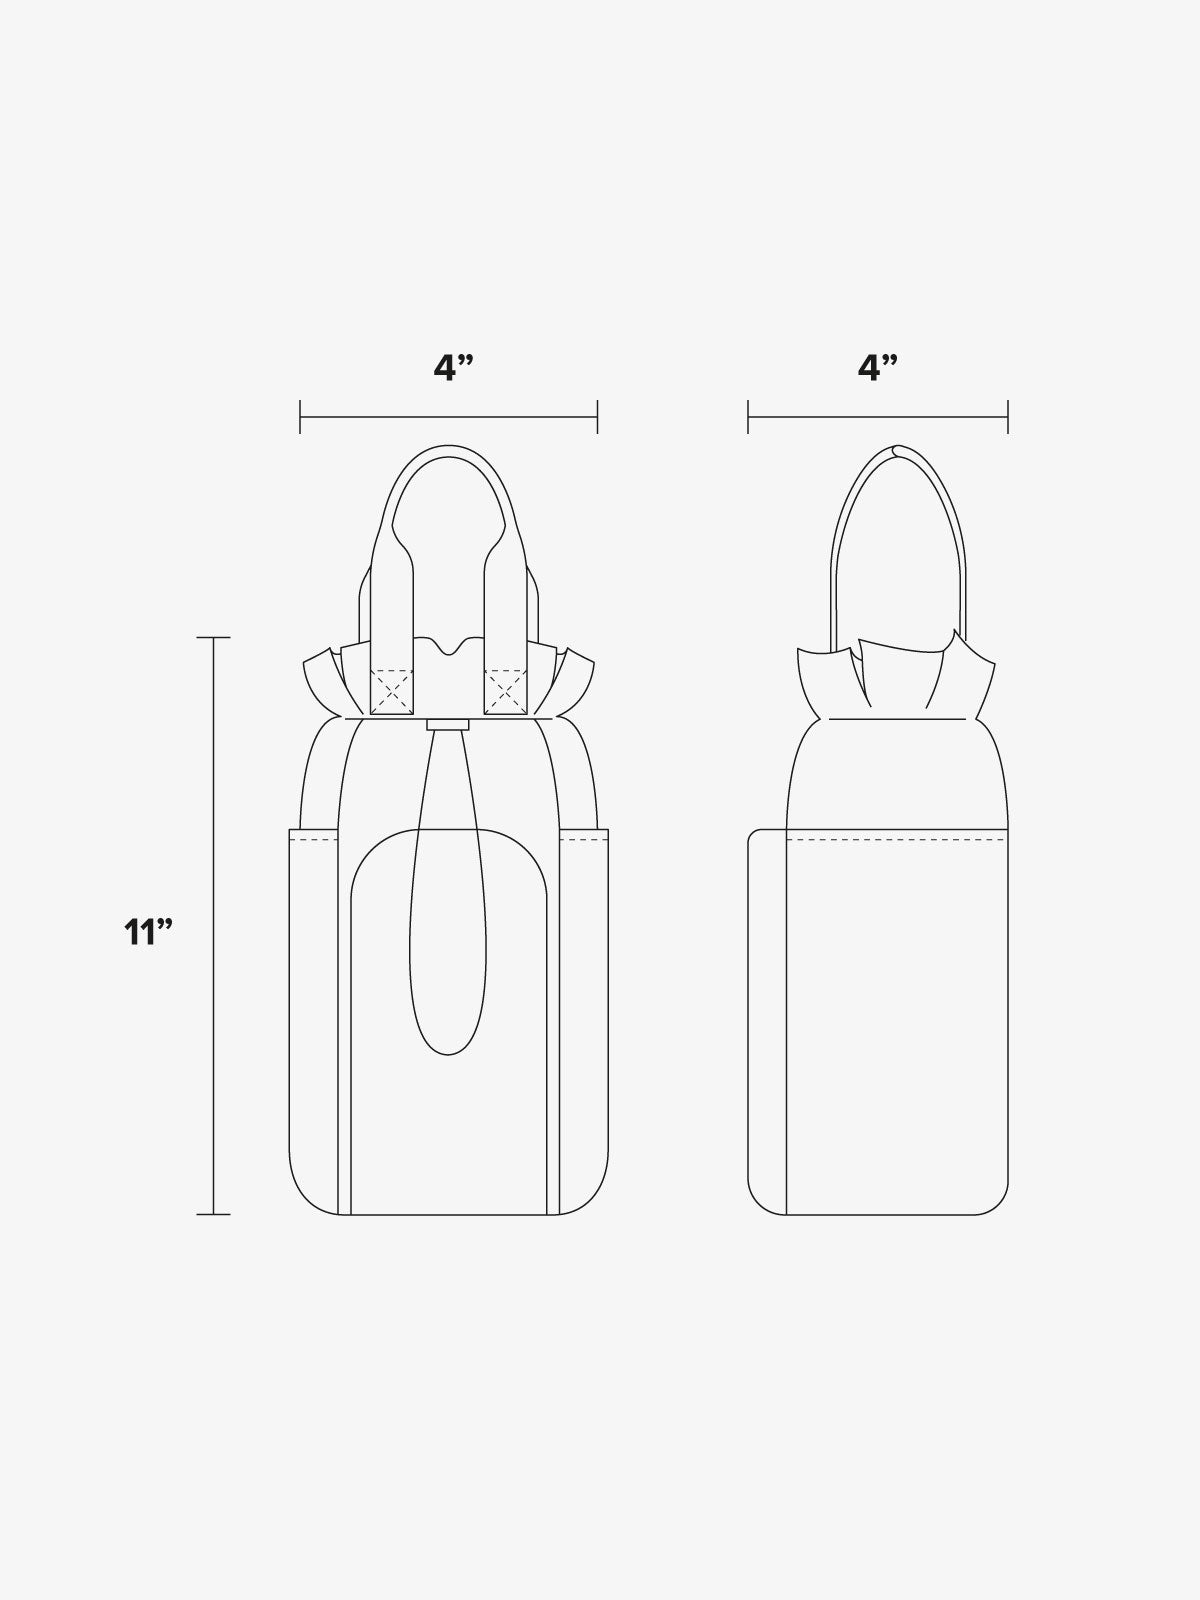 water bottle holder dimensions